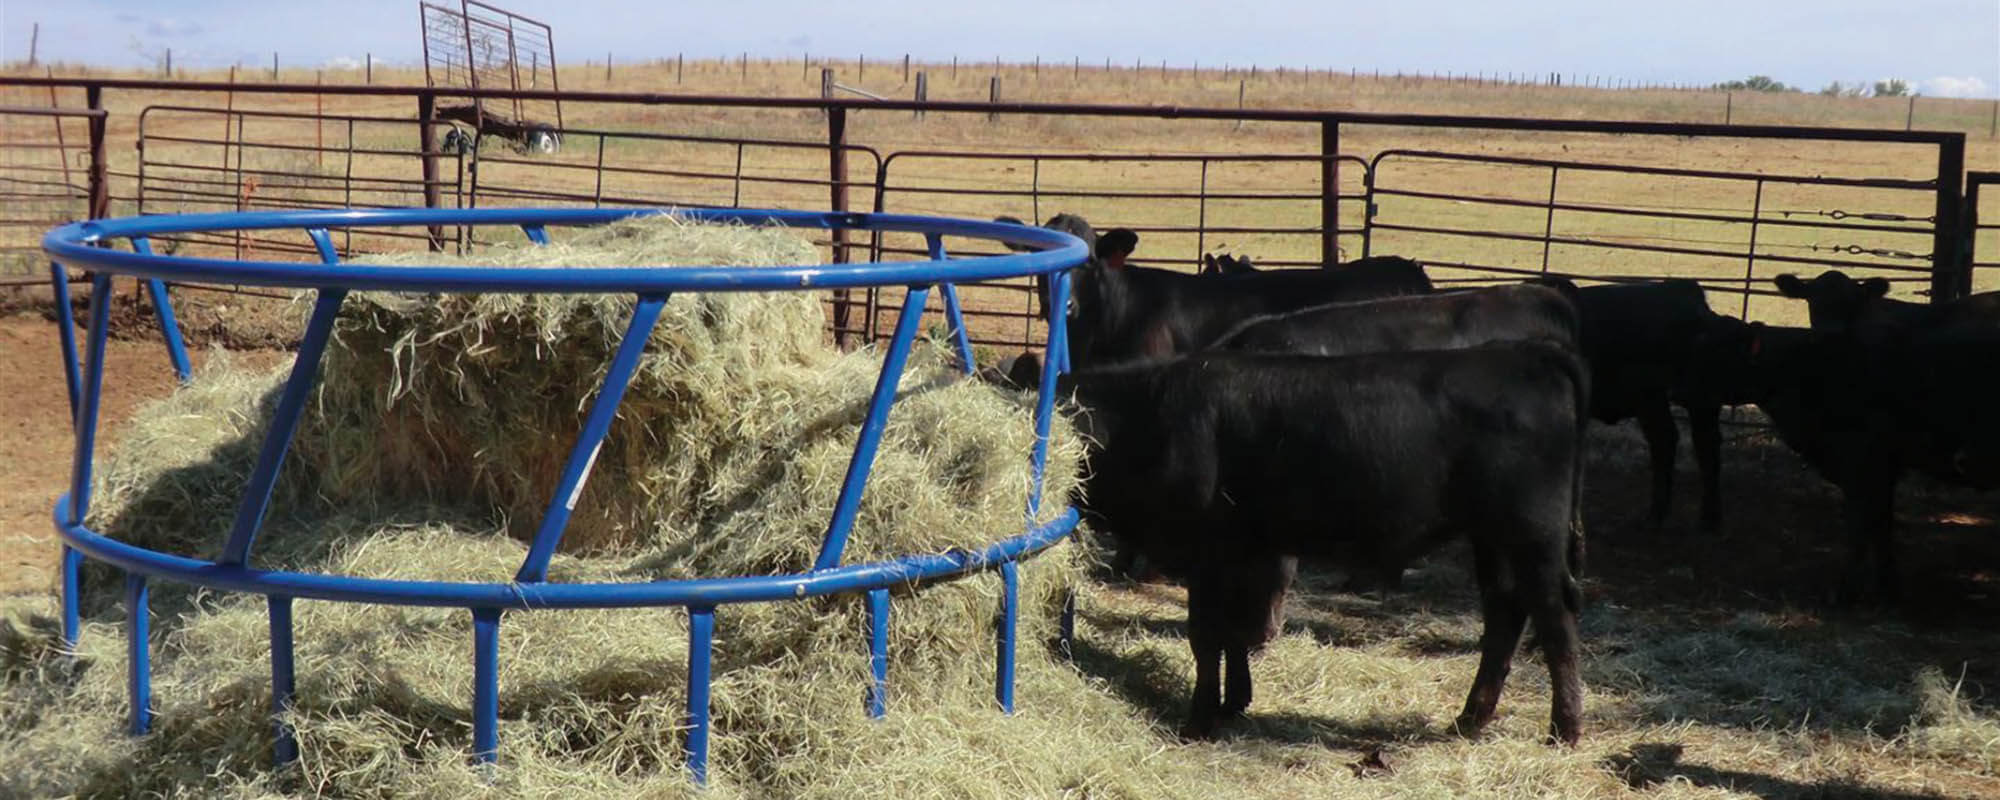 Cattle at hay feeder